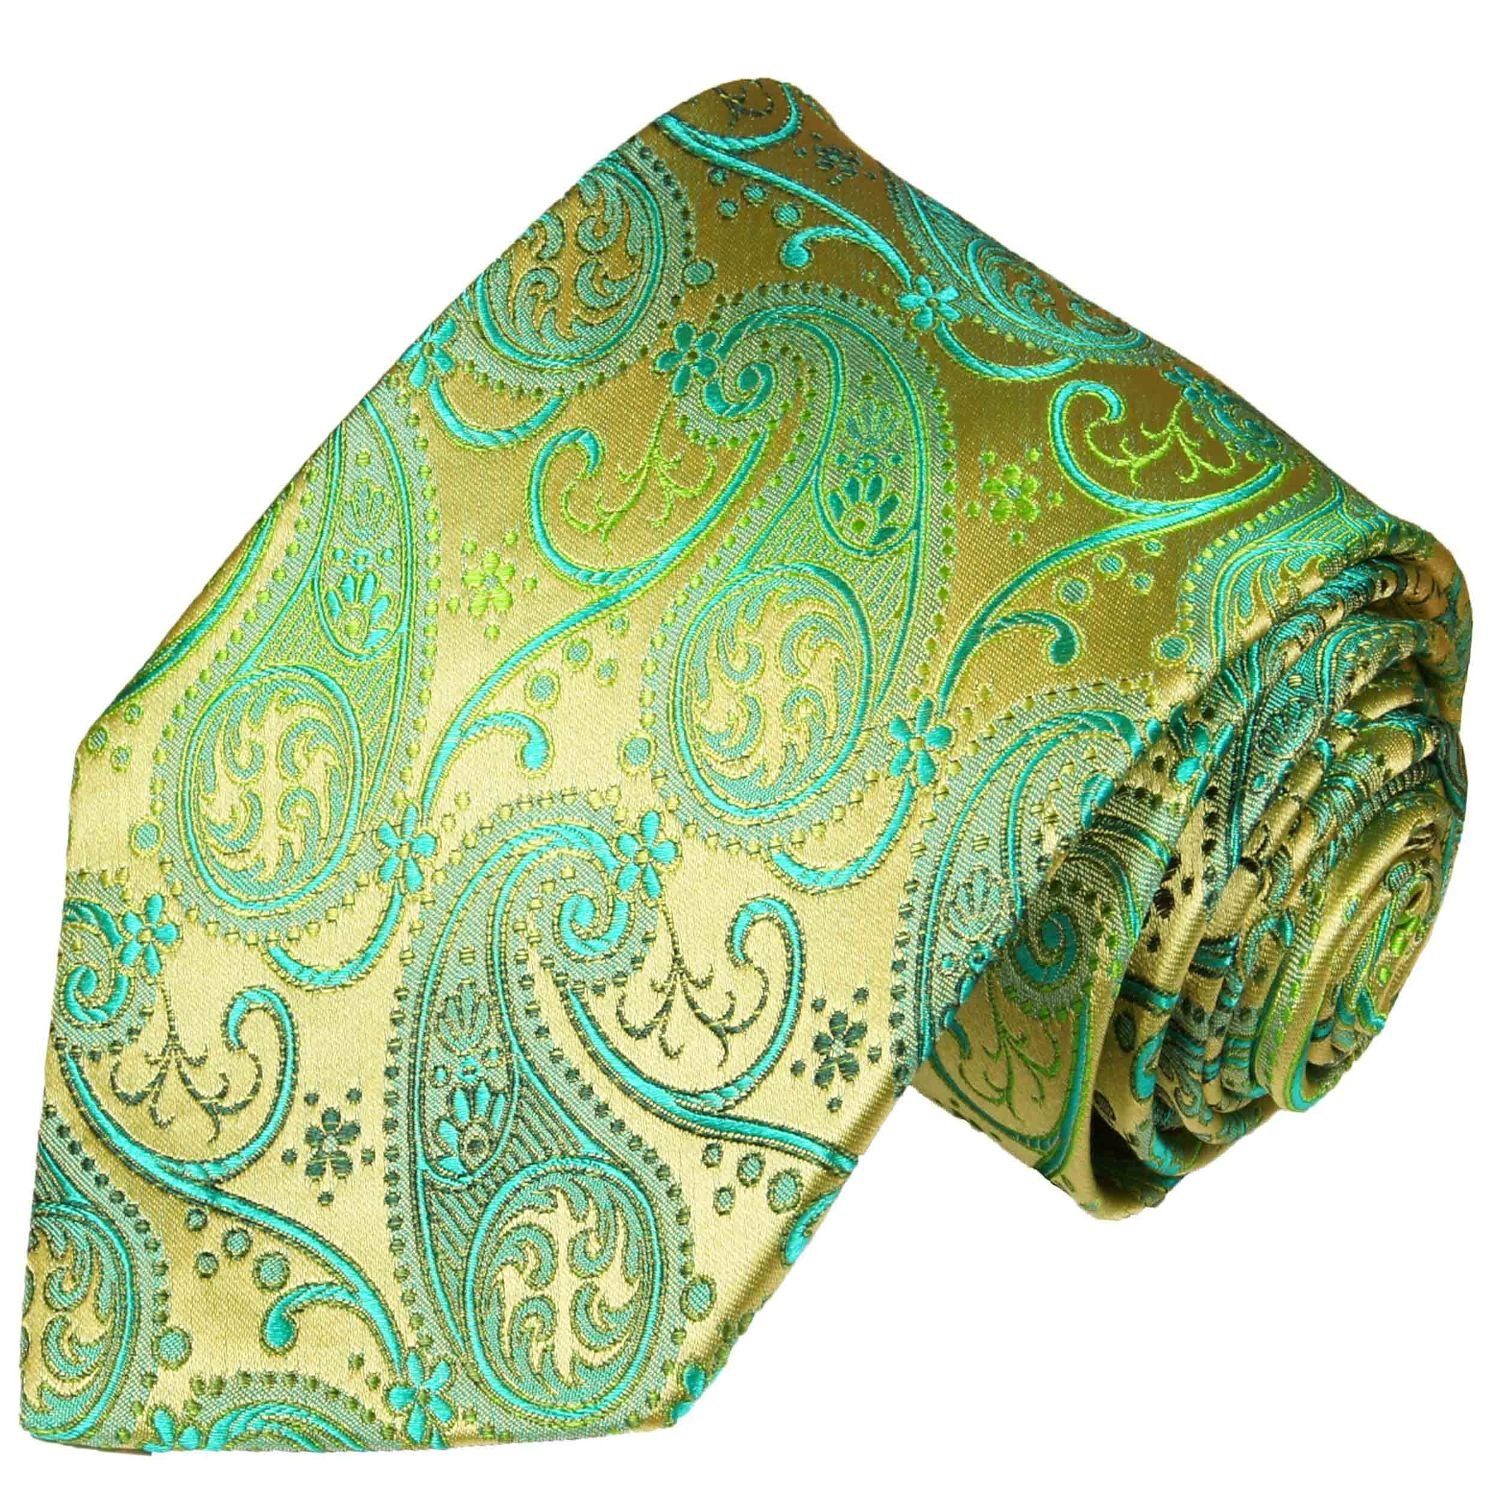 Paul Malone Krawatte Elegante Seidenkrawatte Herren Schlips paisley brokat 100% Seide Schmal (6cm), Extra lang (165cm), gold grün 817